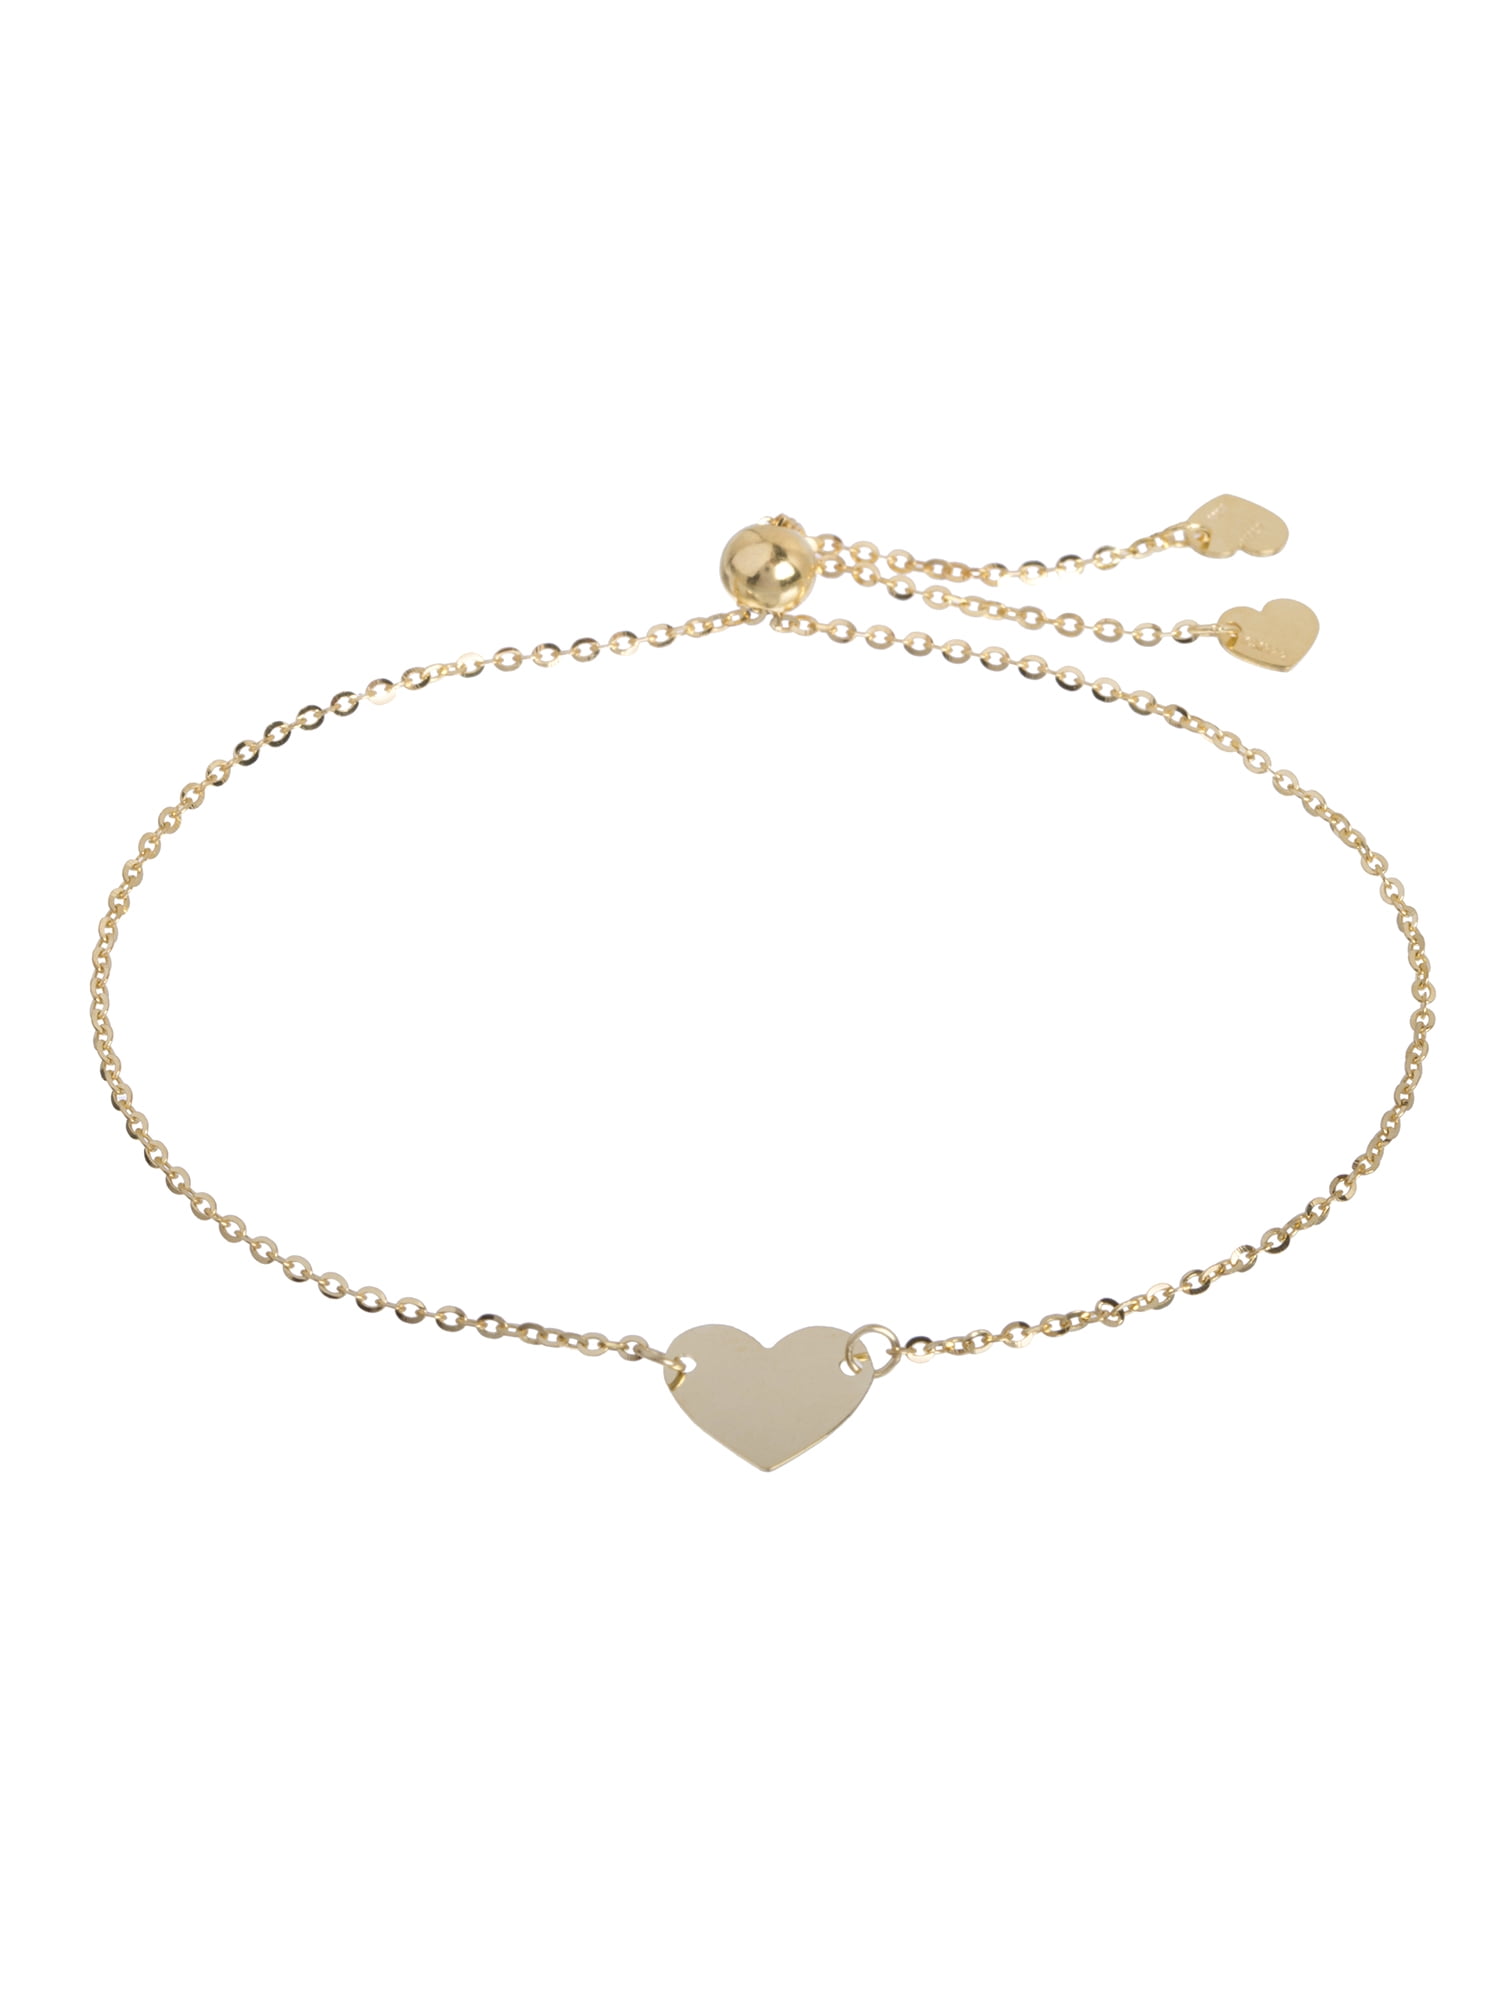 10k Yellow Gold Adjustable Heart Bolo Bracelet, 9